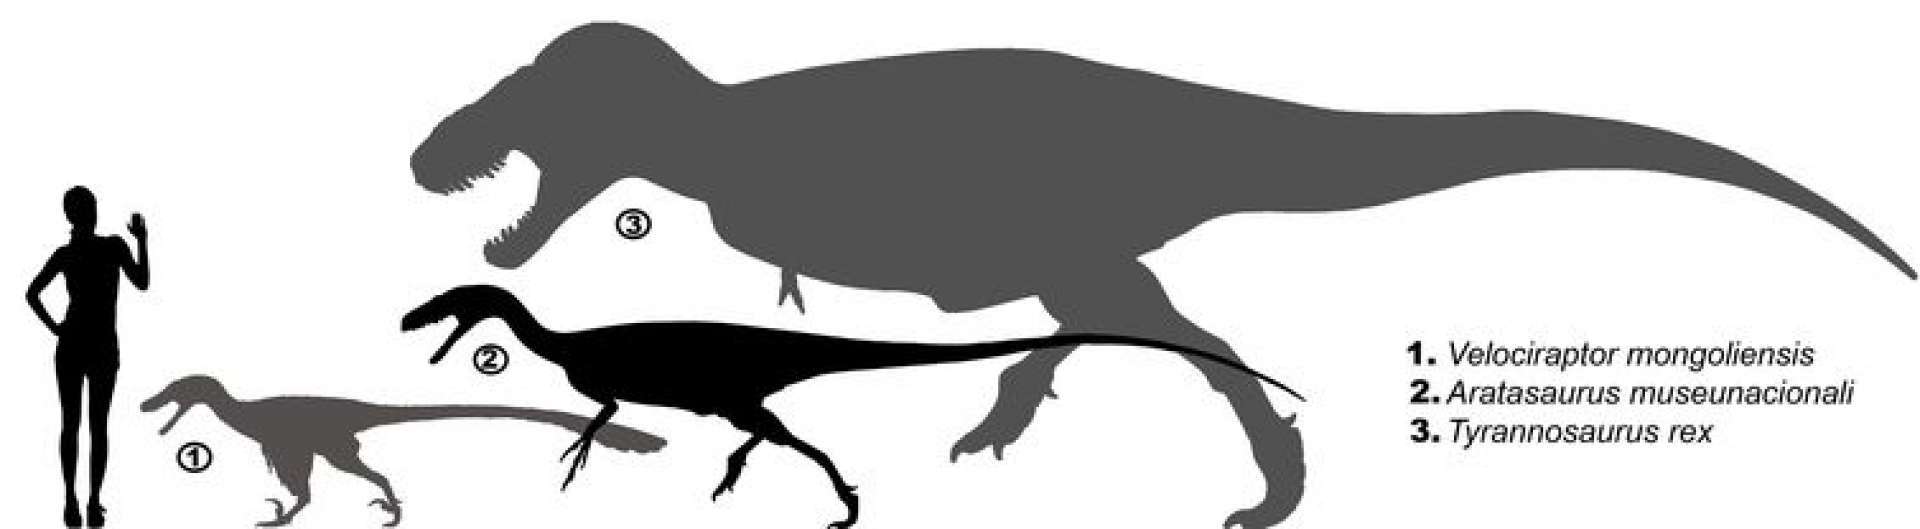 Aratasaurus museunacionali era um animal de porte médio